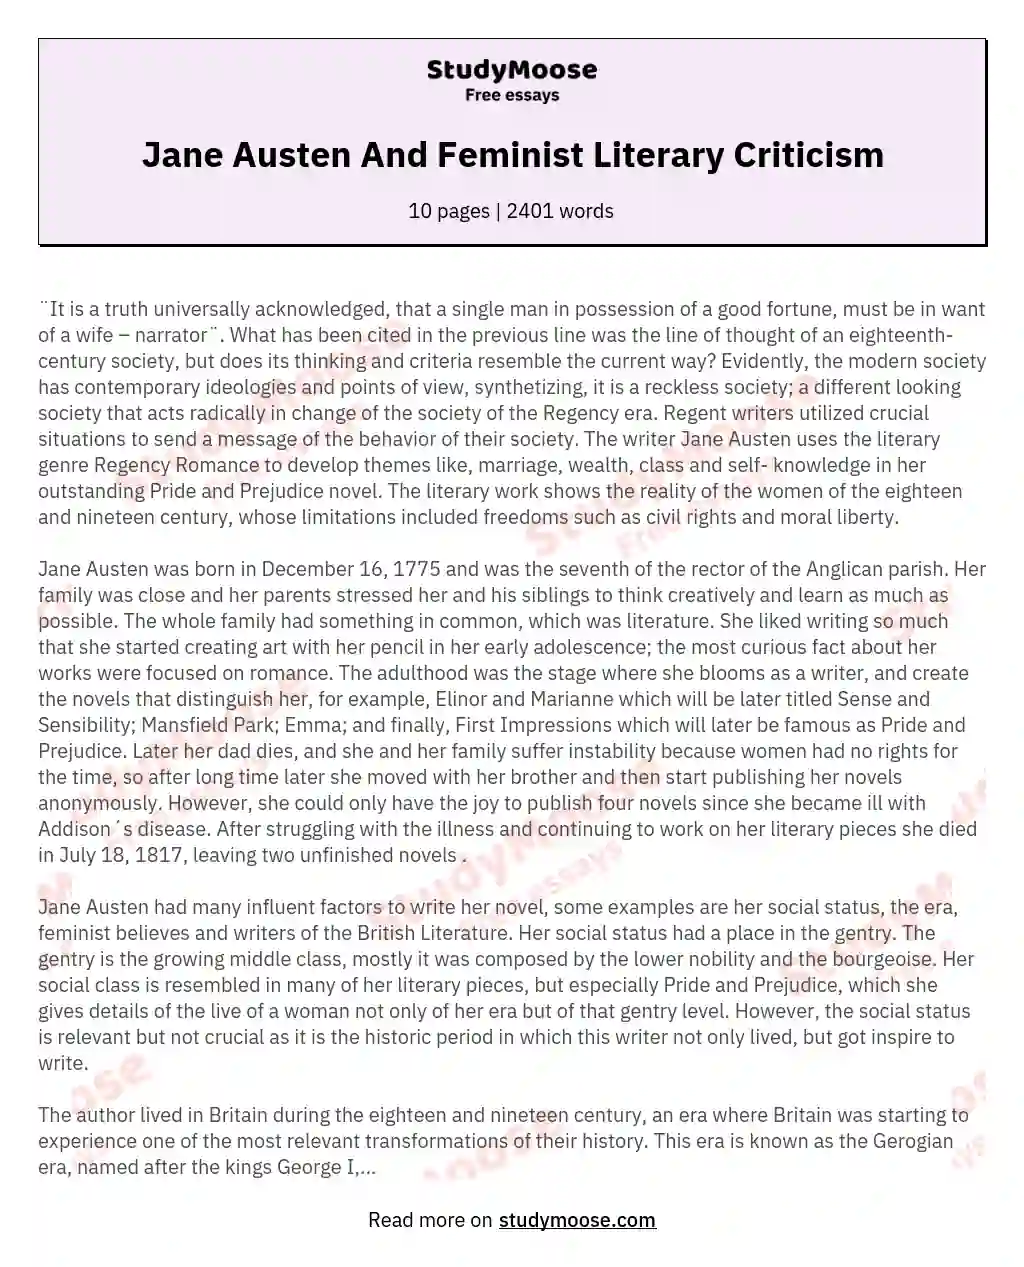 Jane Austen And Feminist Literary Criticism essay